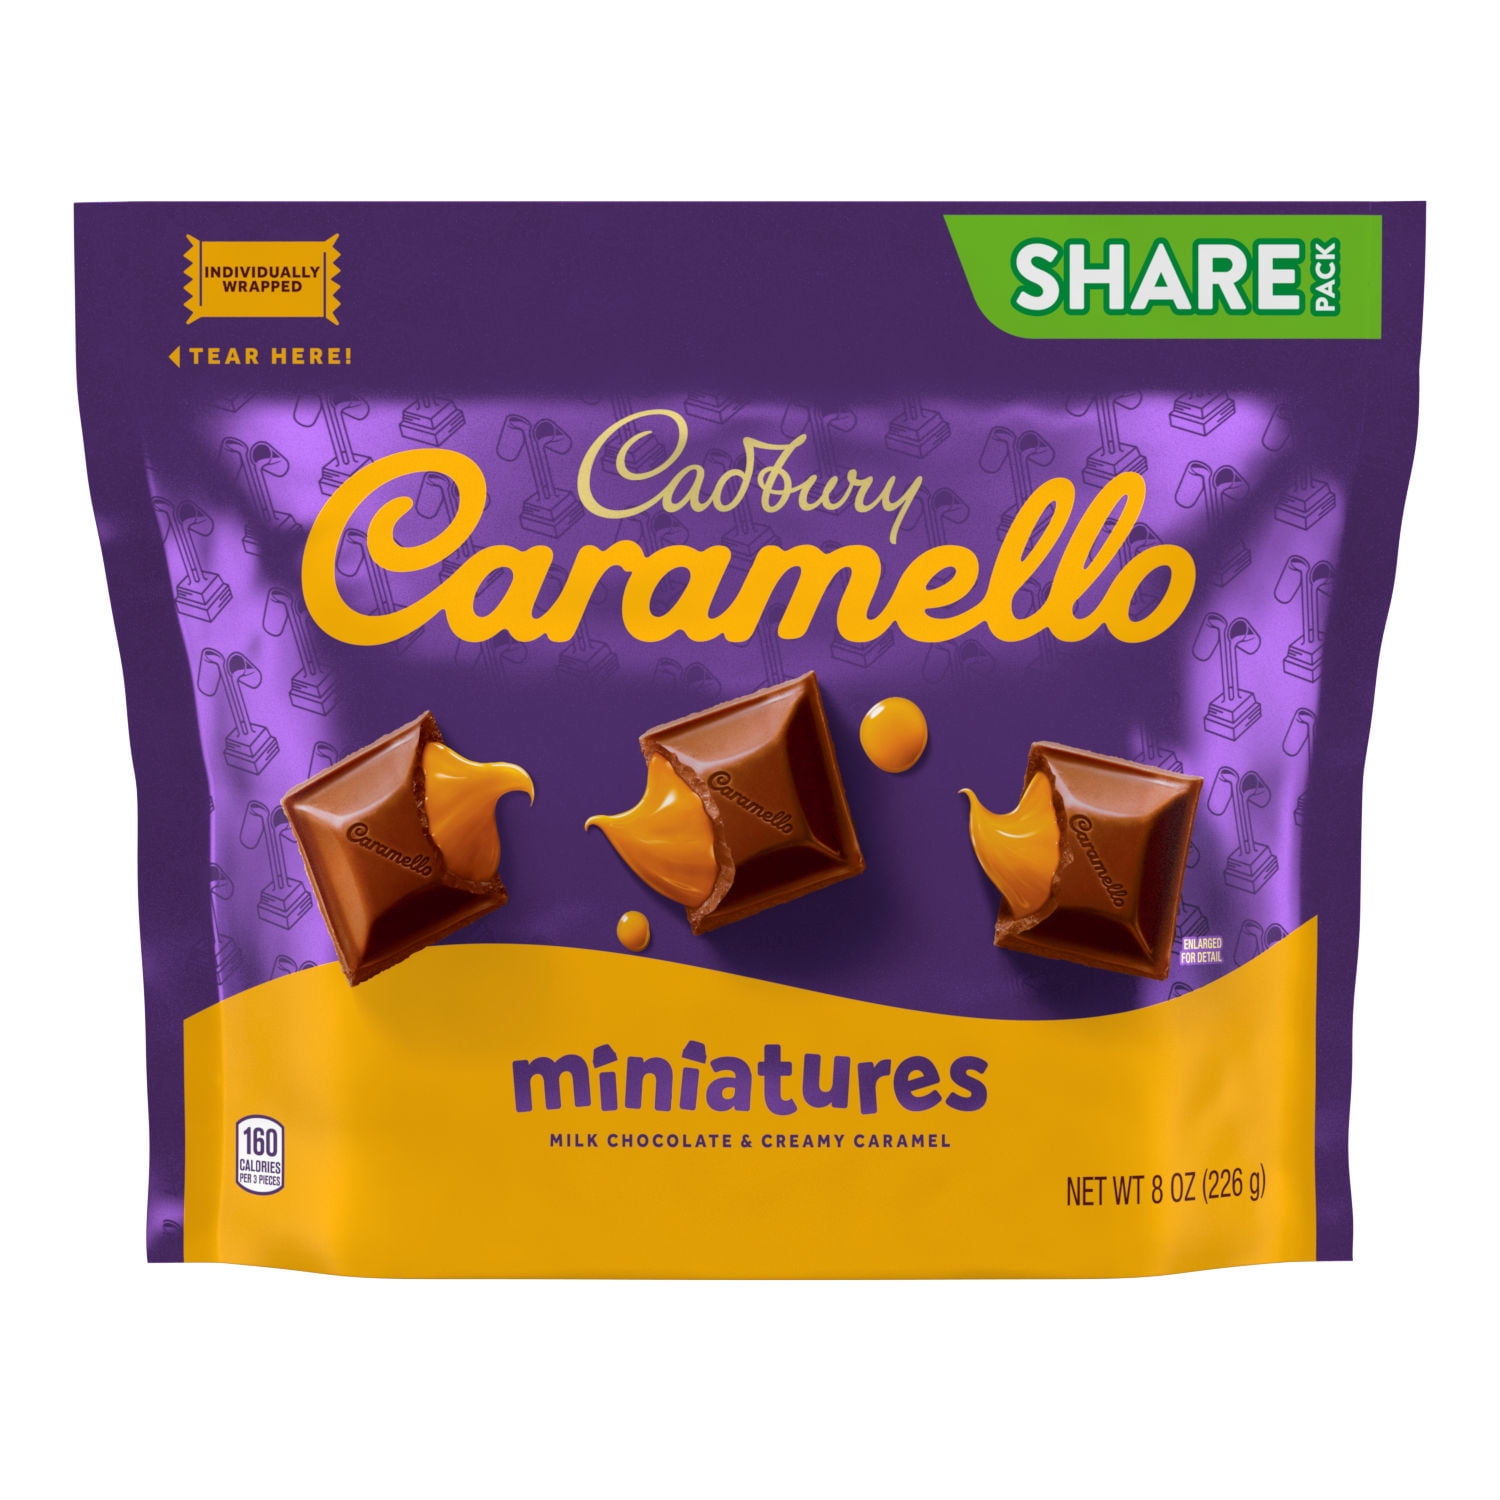 CADBURY CARAMELLO Miniatures Milk Chocolate and Creamy Caramel Squares, Easter Candy Share Pack, 8 oz